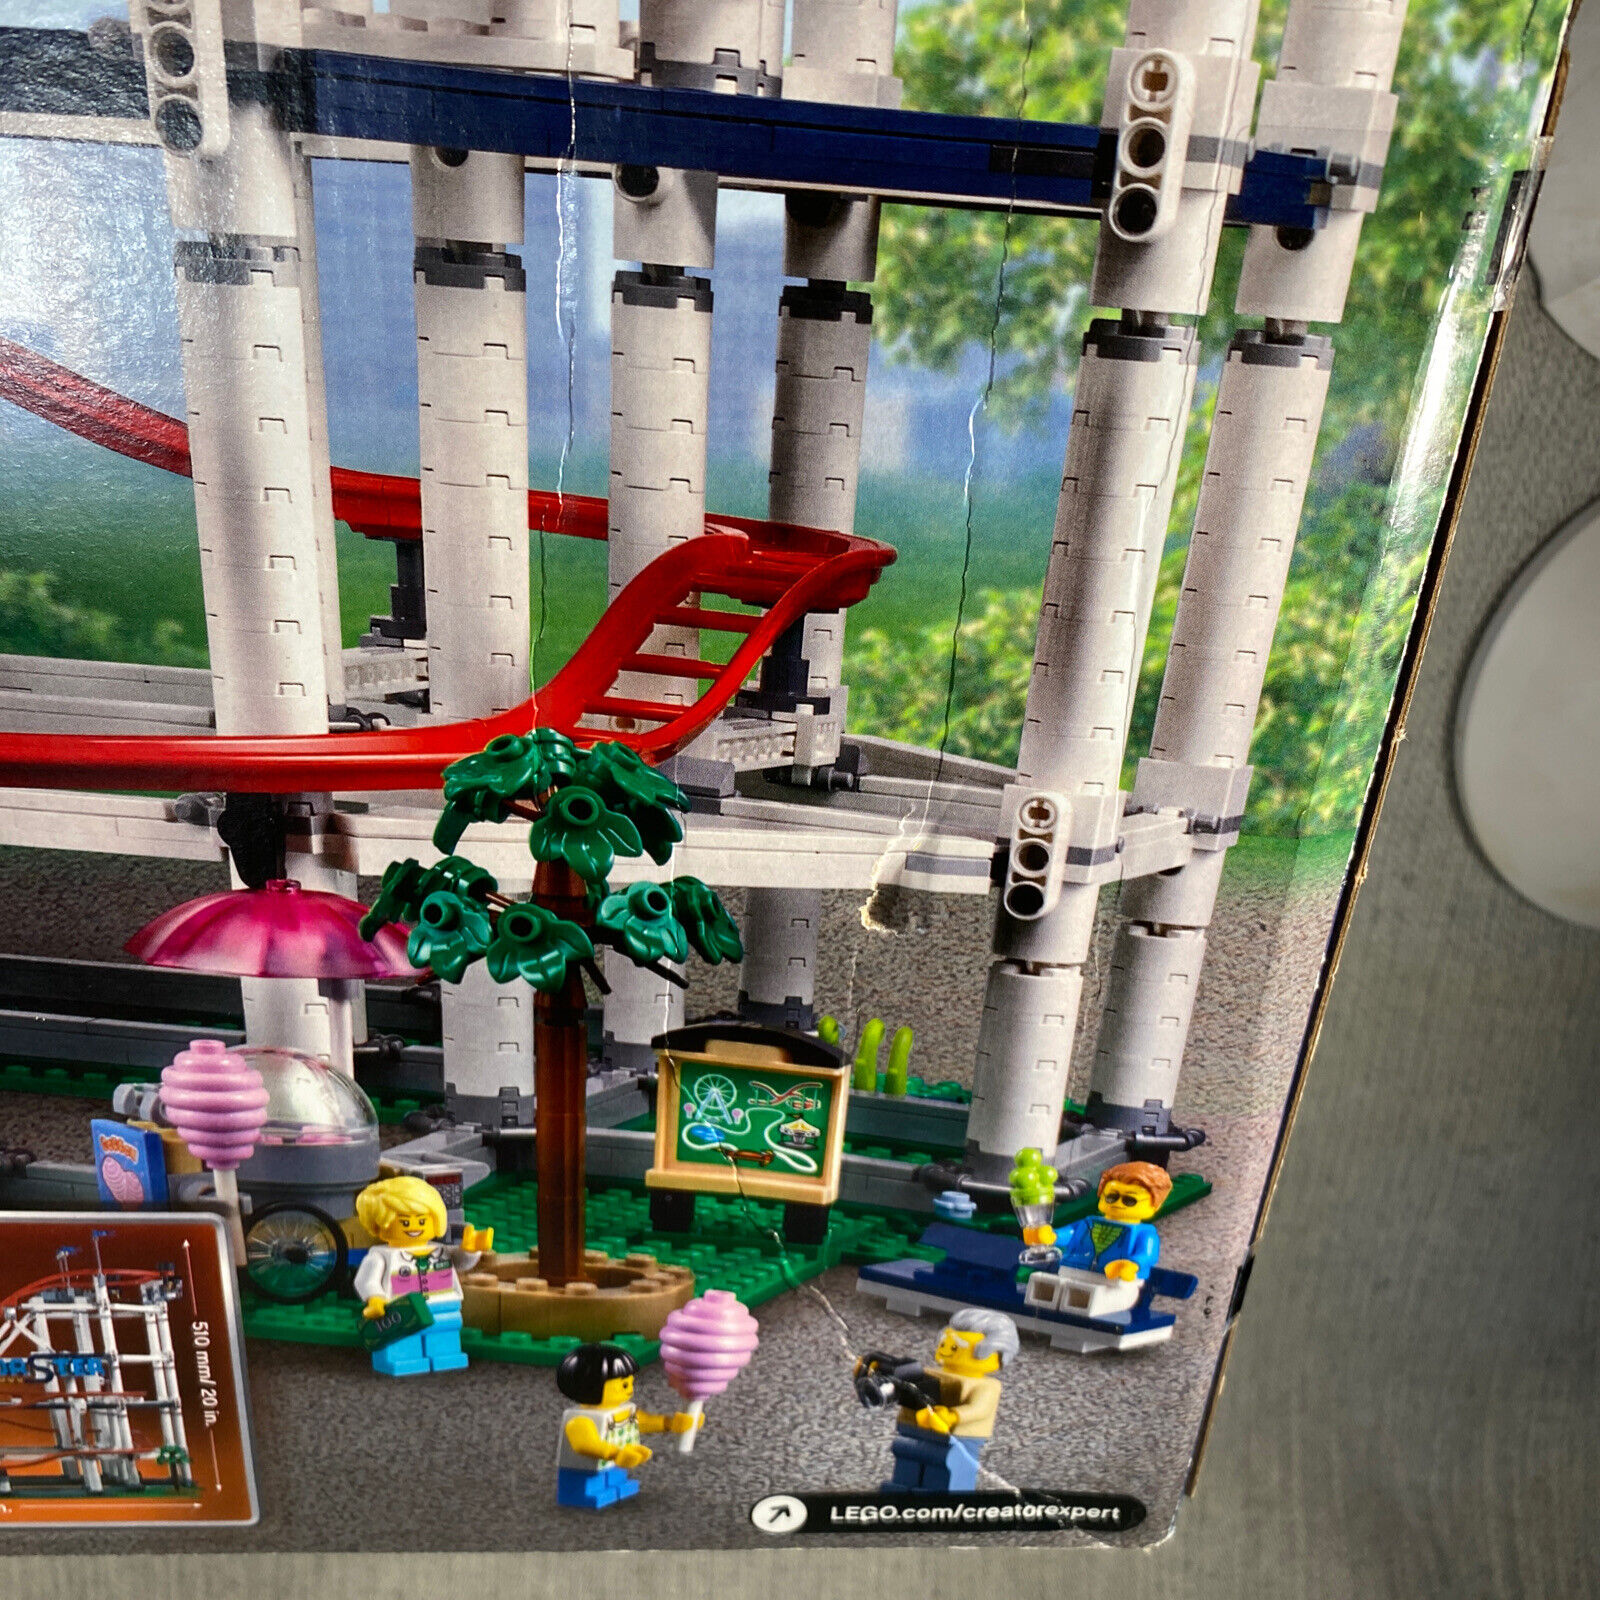 LEGO Creator Expert Roller Coaster 10261 Building Kit 4124 Pieces - Plastic